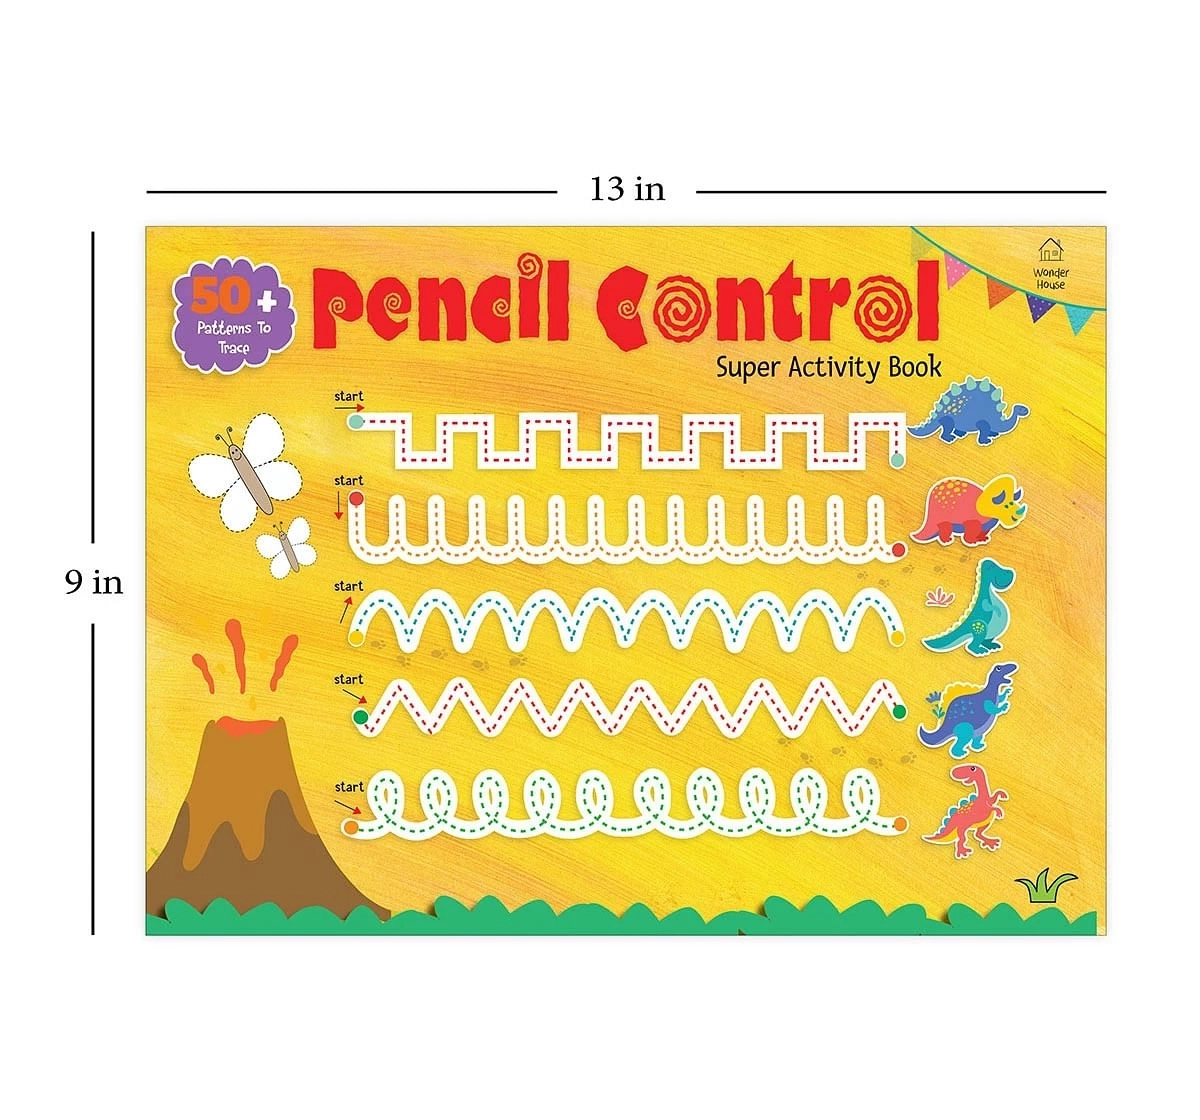 Wonder House Books Pencil Control Super Activity Book for kids 3Y+, Multicolour